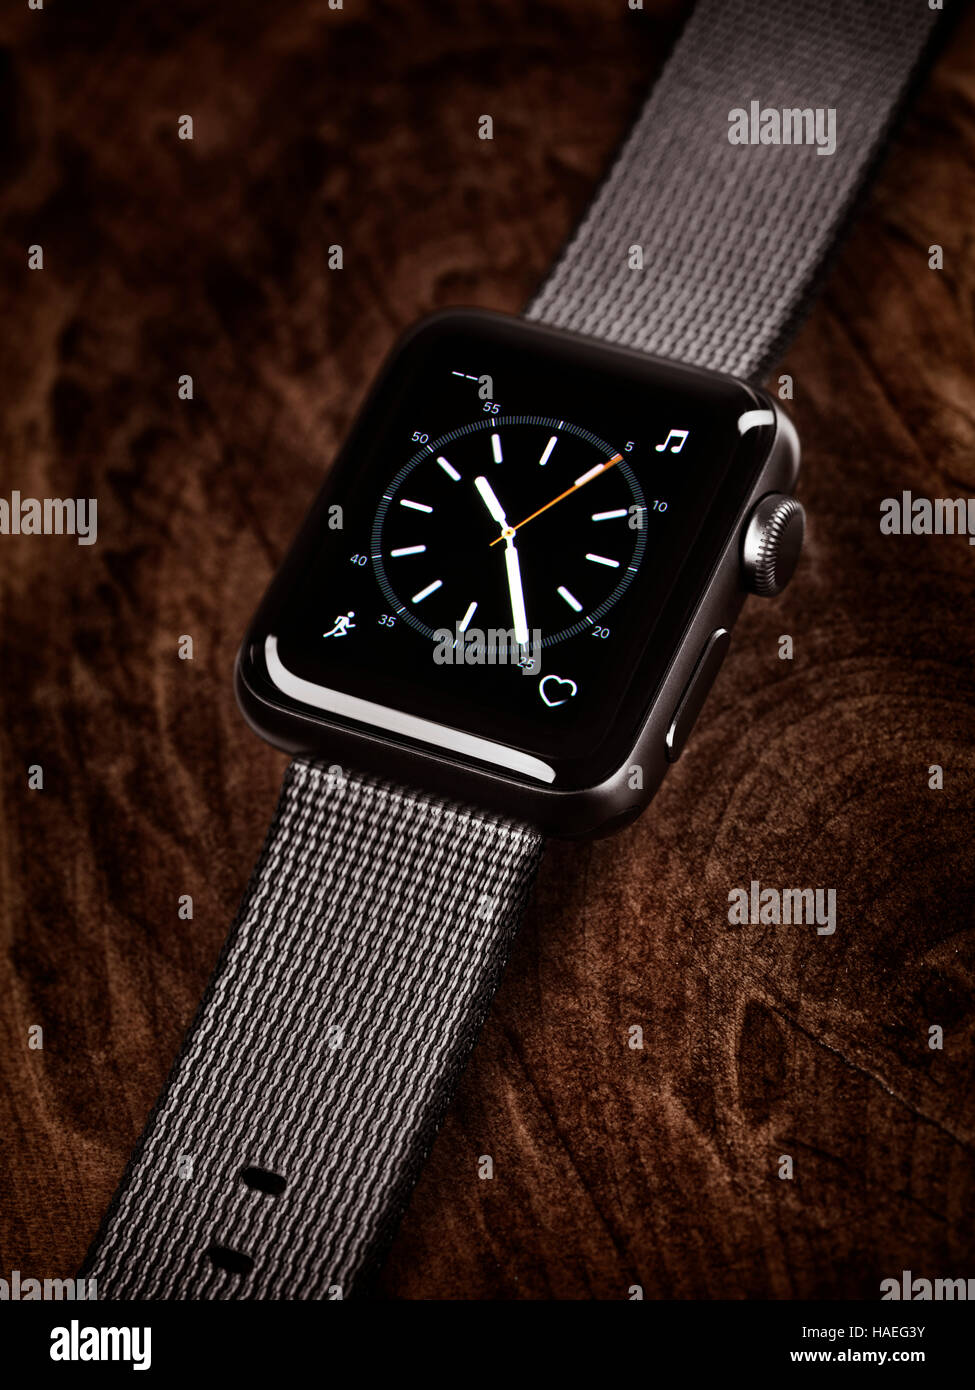 Apple Watch smartwatch on wooden desk background Stock Photo